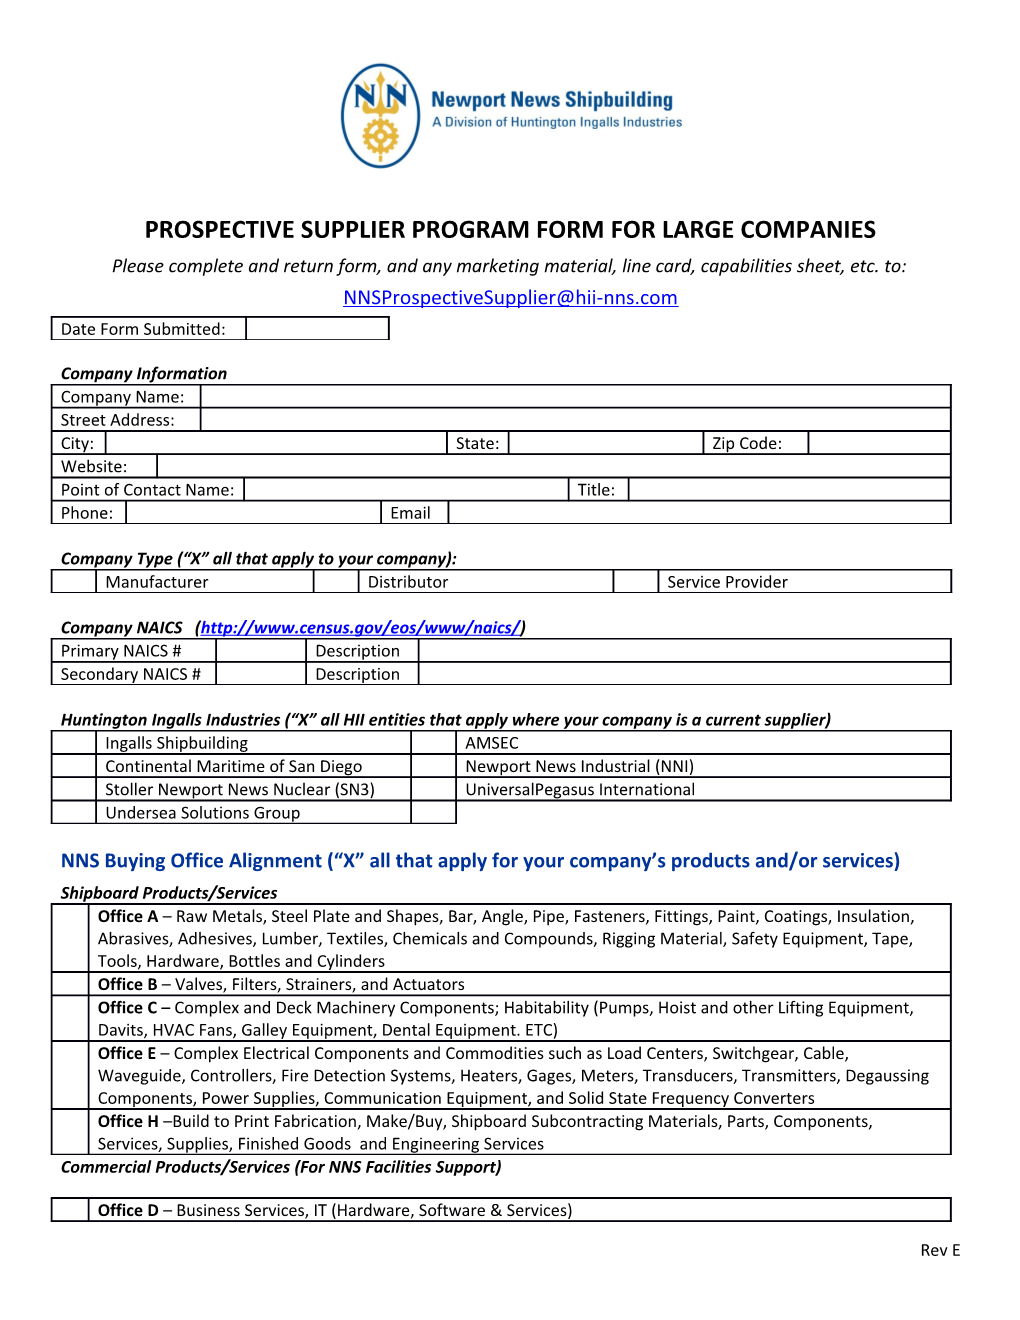 Prospective Supplier Program Form for Large Companies